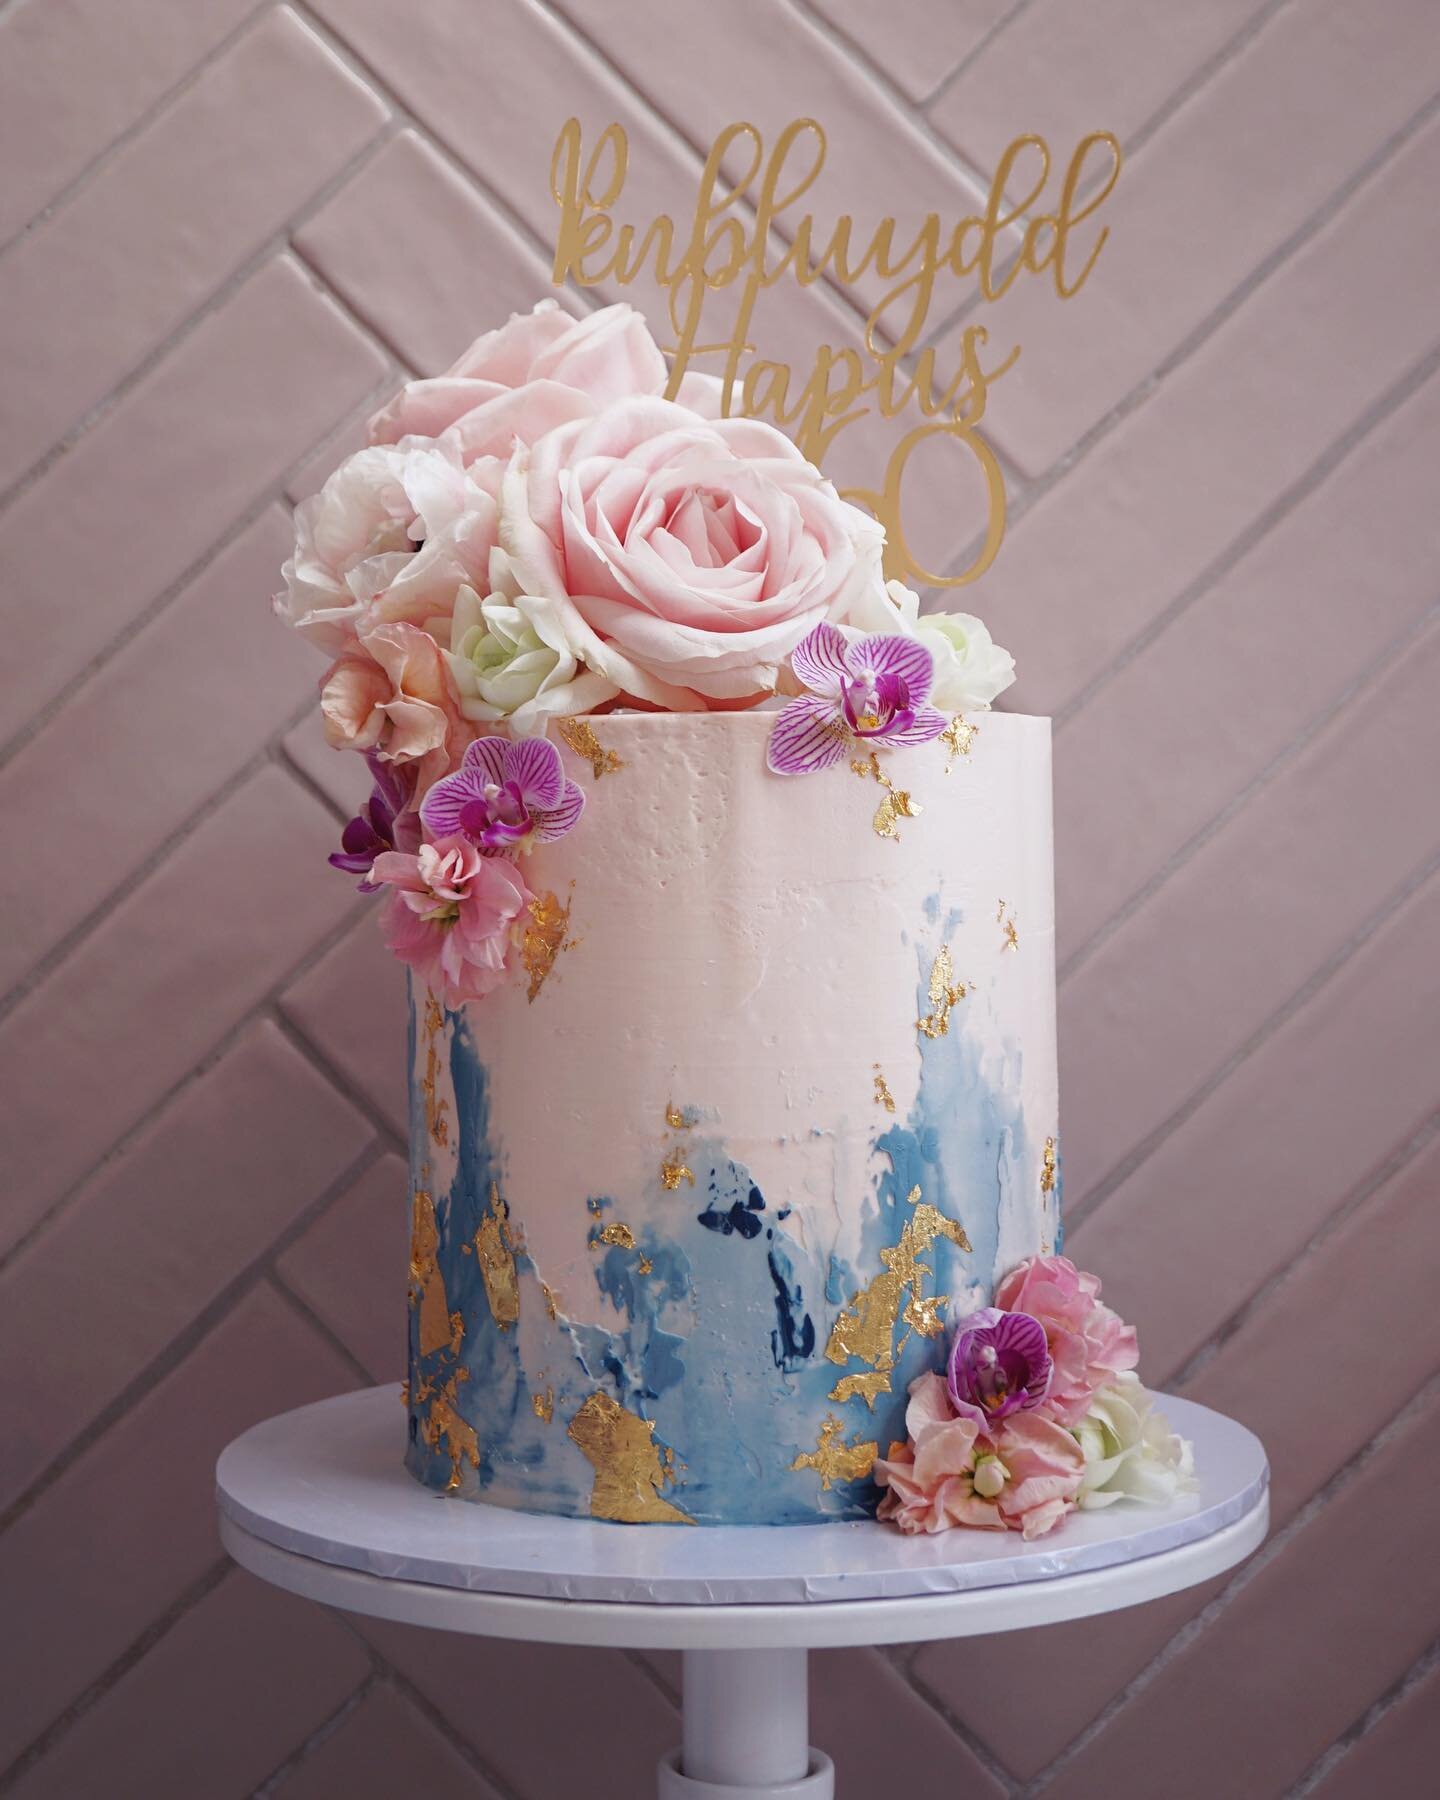 🌸💙 PINK &amp; BLUE 💙🌸
⠀⠀⠀⠀⠀⠀⠀⠀⠀
One of my favourite colour combinations. 
⠀⠀⠀⠀⠀⠀⠀⠀⠀
birthdaycake #pastelcake #pinkcake #buttercream #dripcake #cake #cakemaker #cakedecorating #instacake #instacakes #baker #bake #girlscake #buttercreamcake #instab